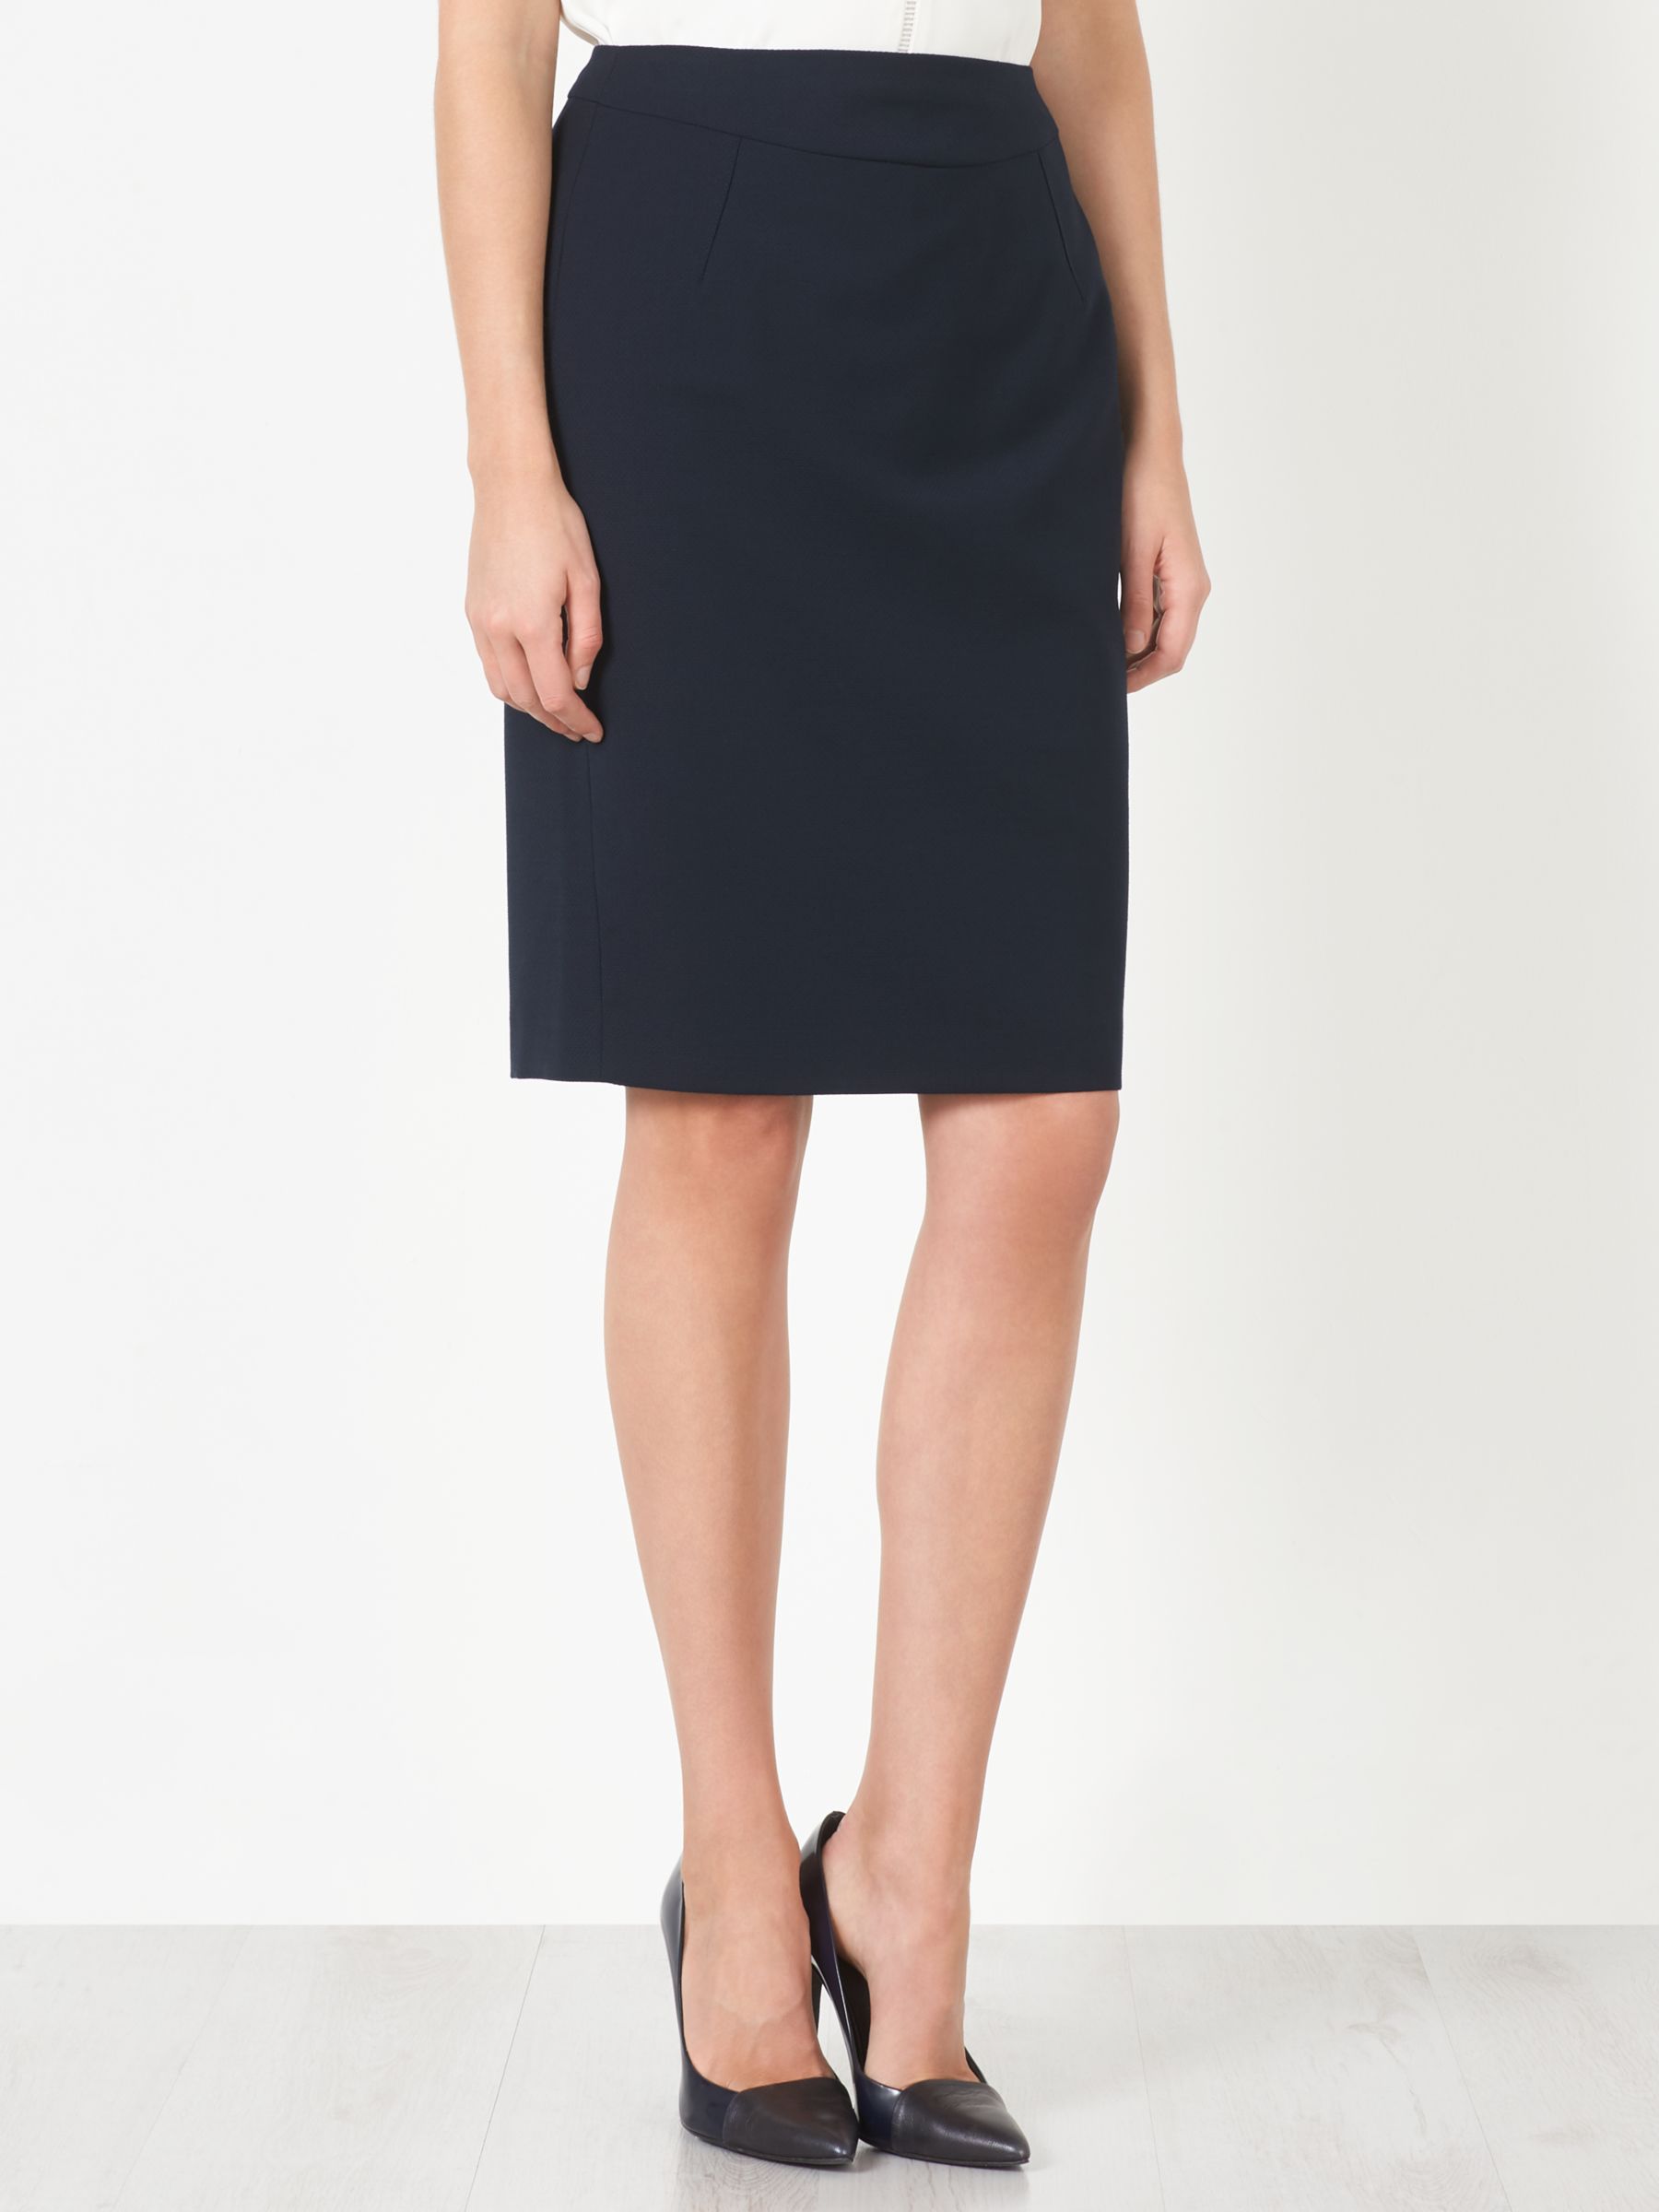 John Lewis & Partners Esme Jacquard Skirt, Navy, 10